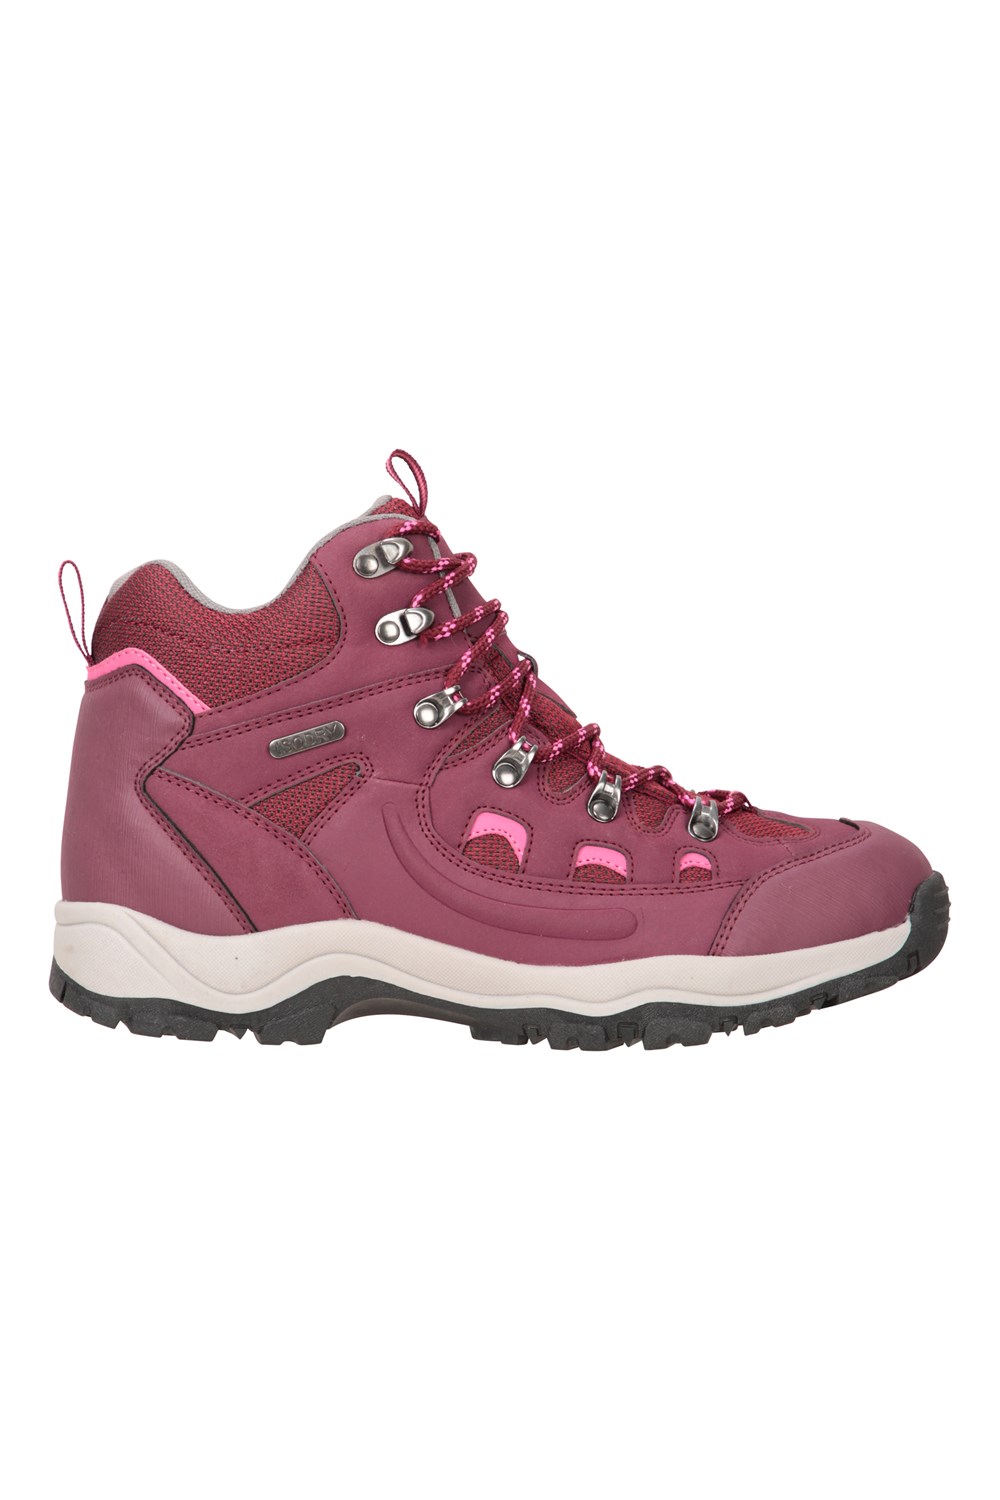 miniature 32 - Mountain Warehouse Womens Waterproof Hiking Boots Walking Trekking Ladies Boot